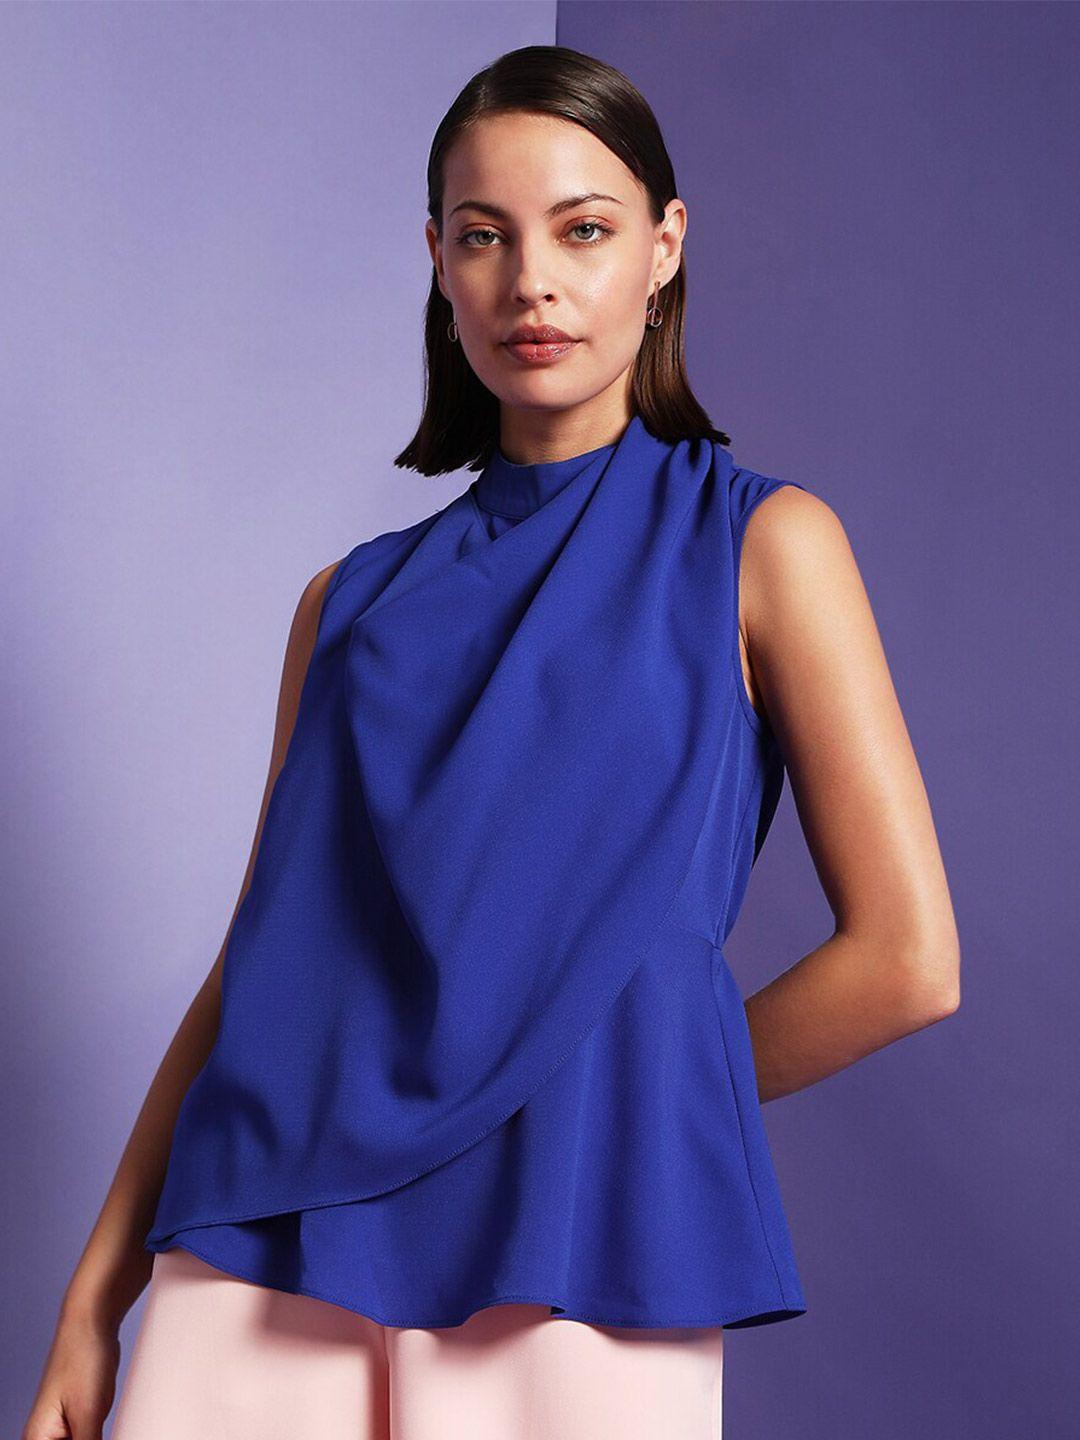 vero moda marquee collection women blue solid top